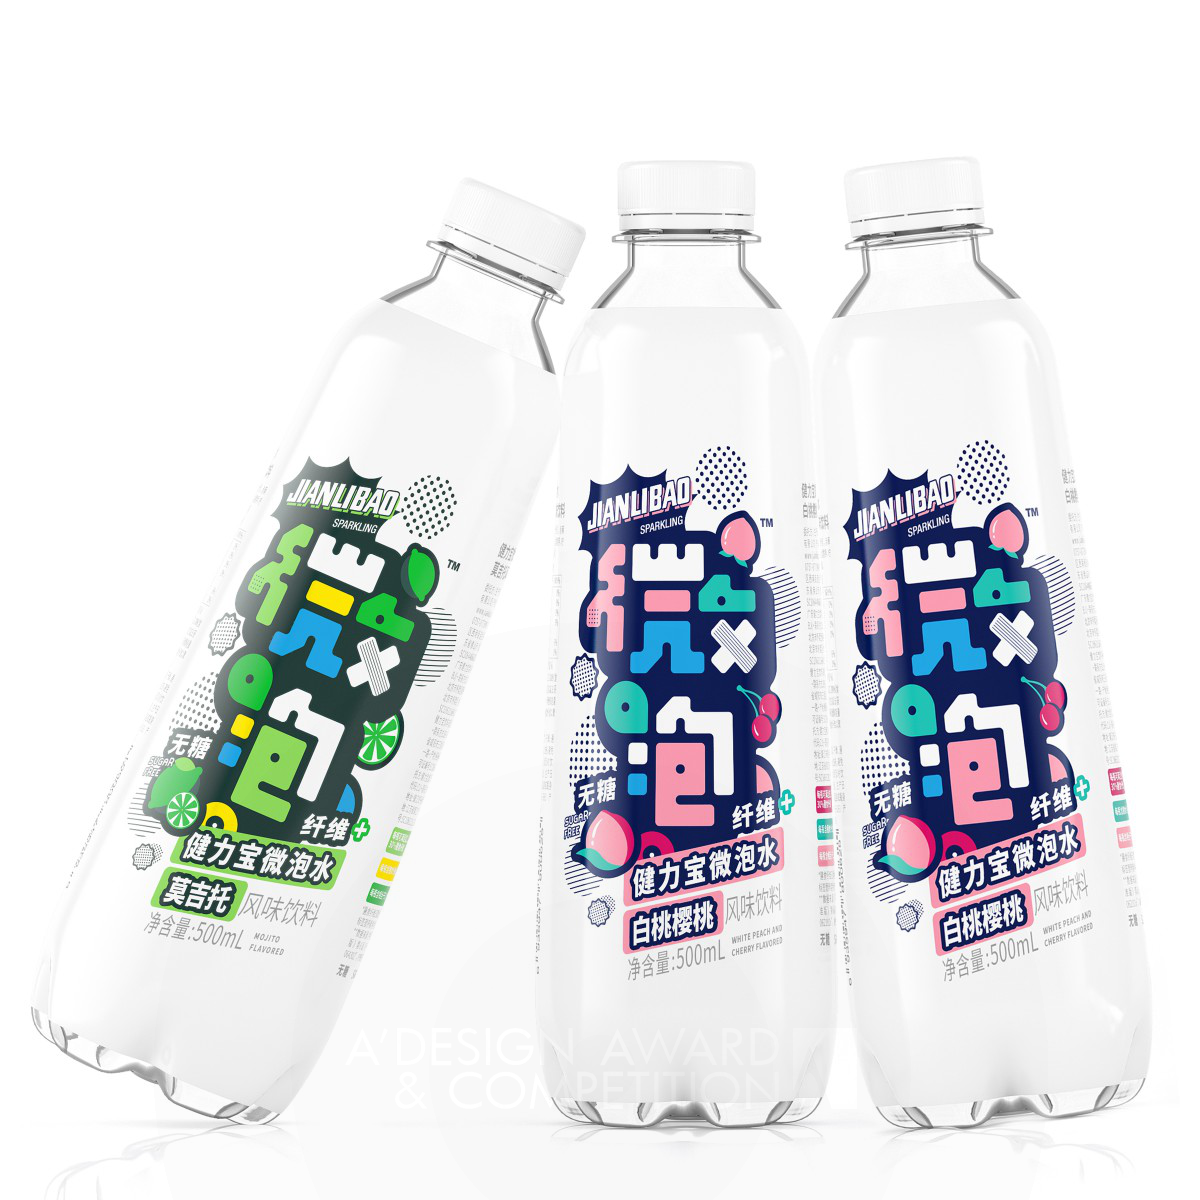 Jianlibao Wepop Sugar-free Sparkling Water by TIGER PAN